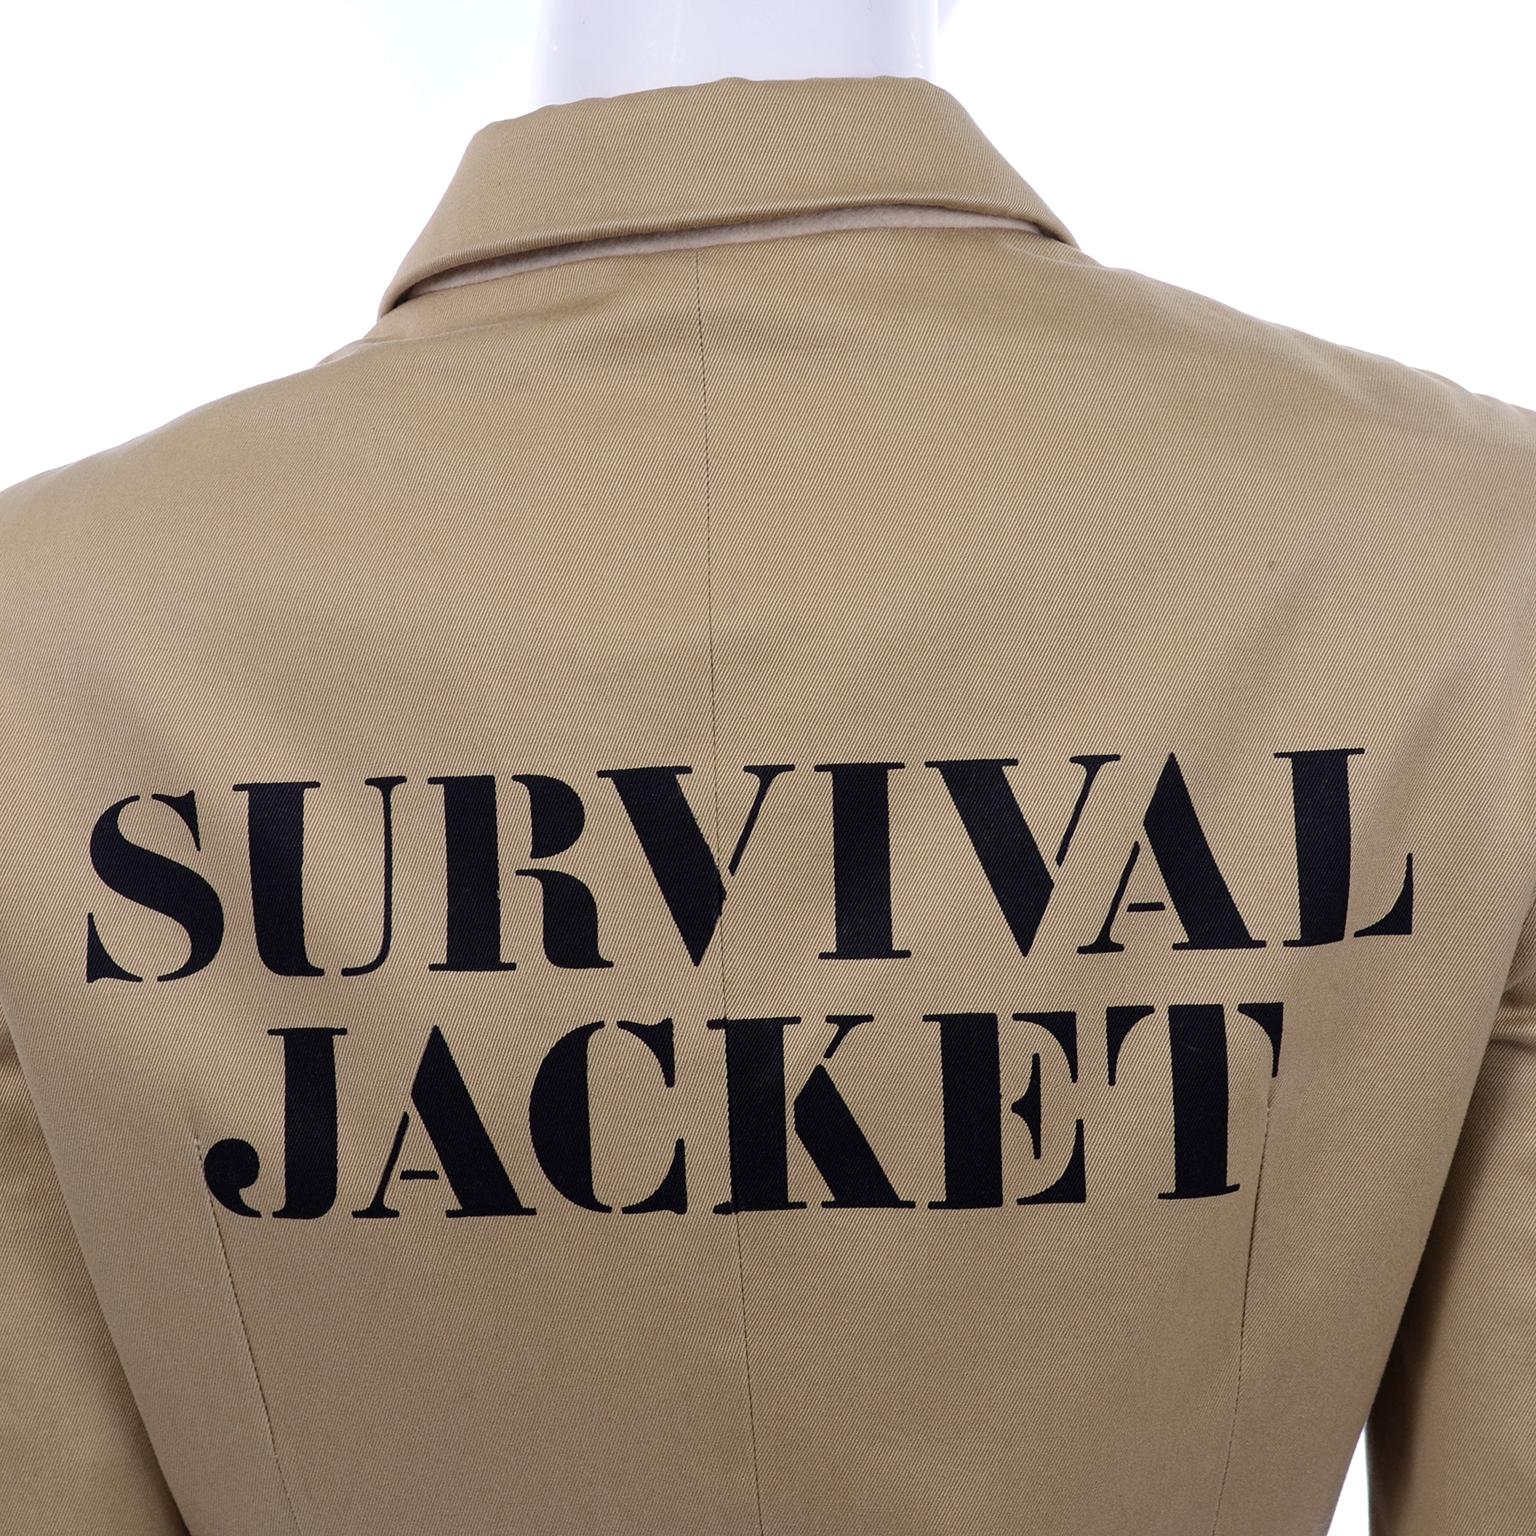 1991 Franco Moschino Couture Survival Jacket in Khaki Cotton Urban Jungle Tools 8